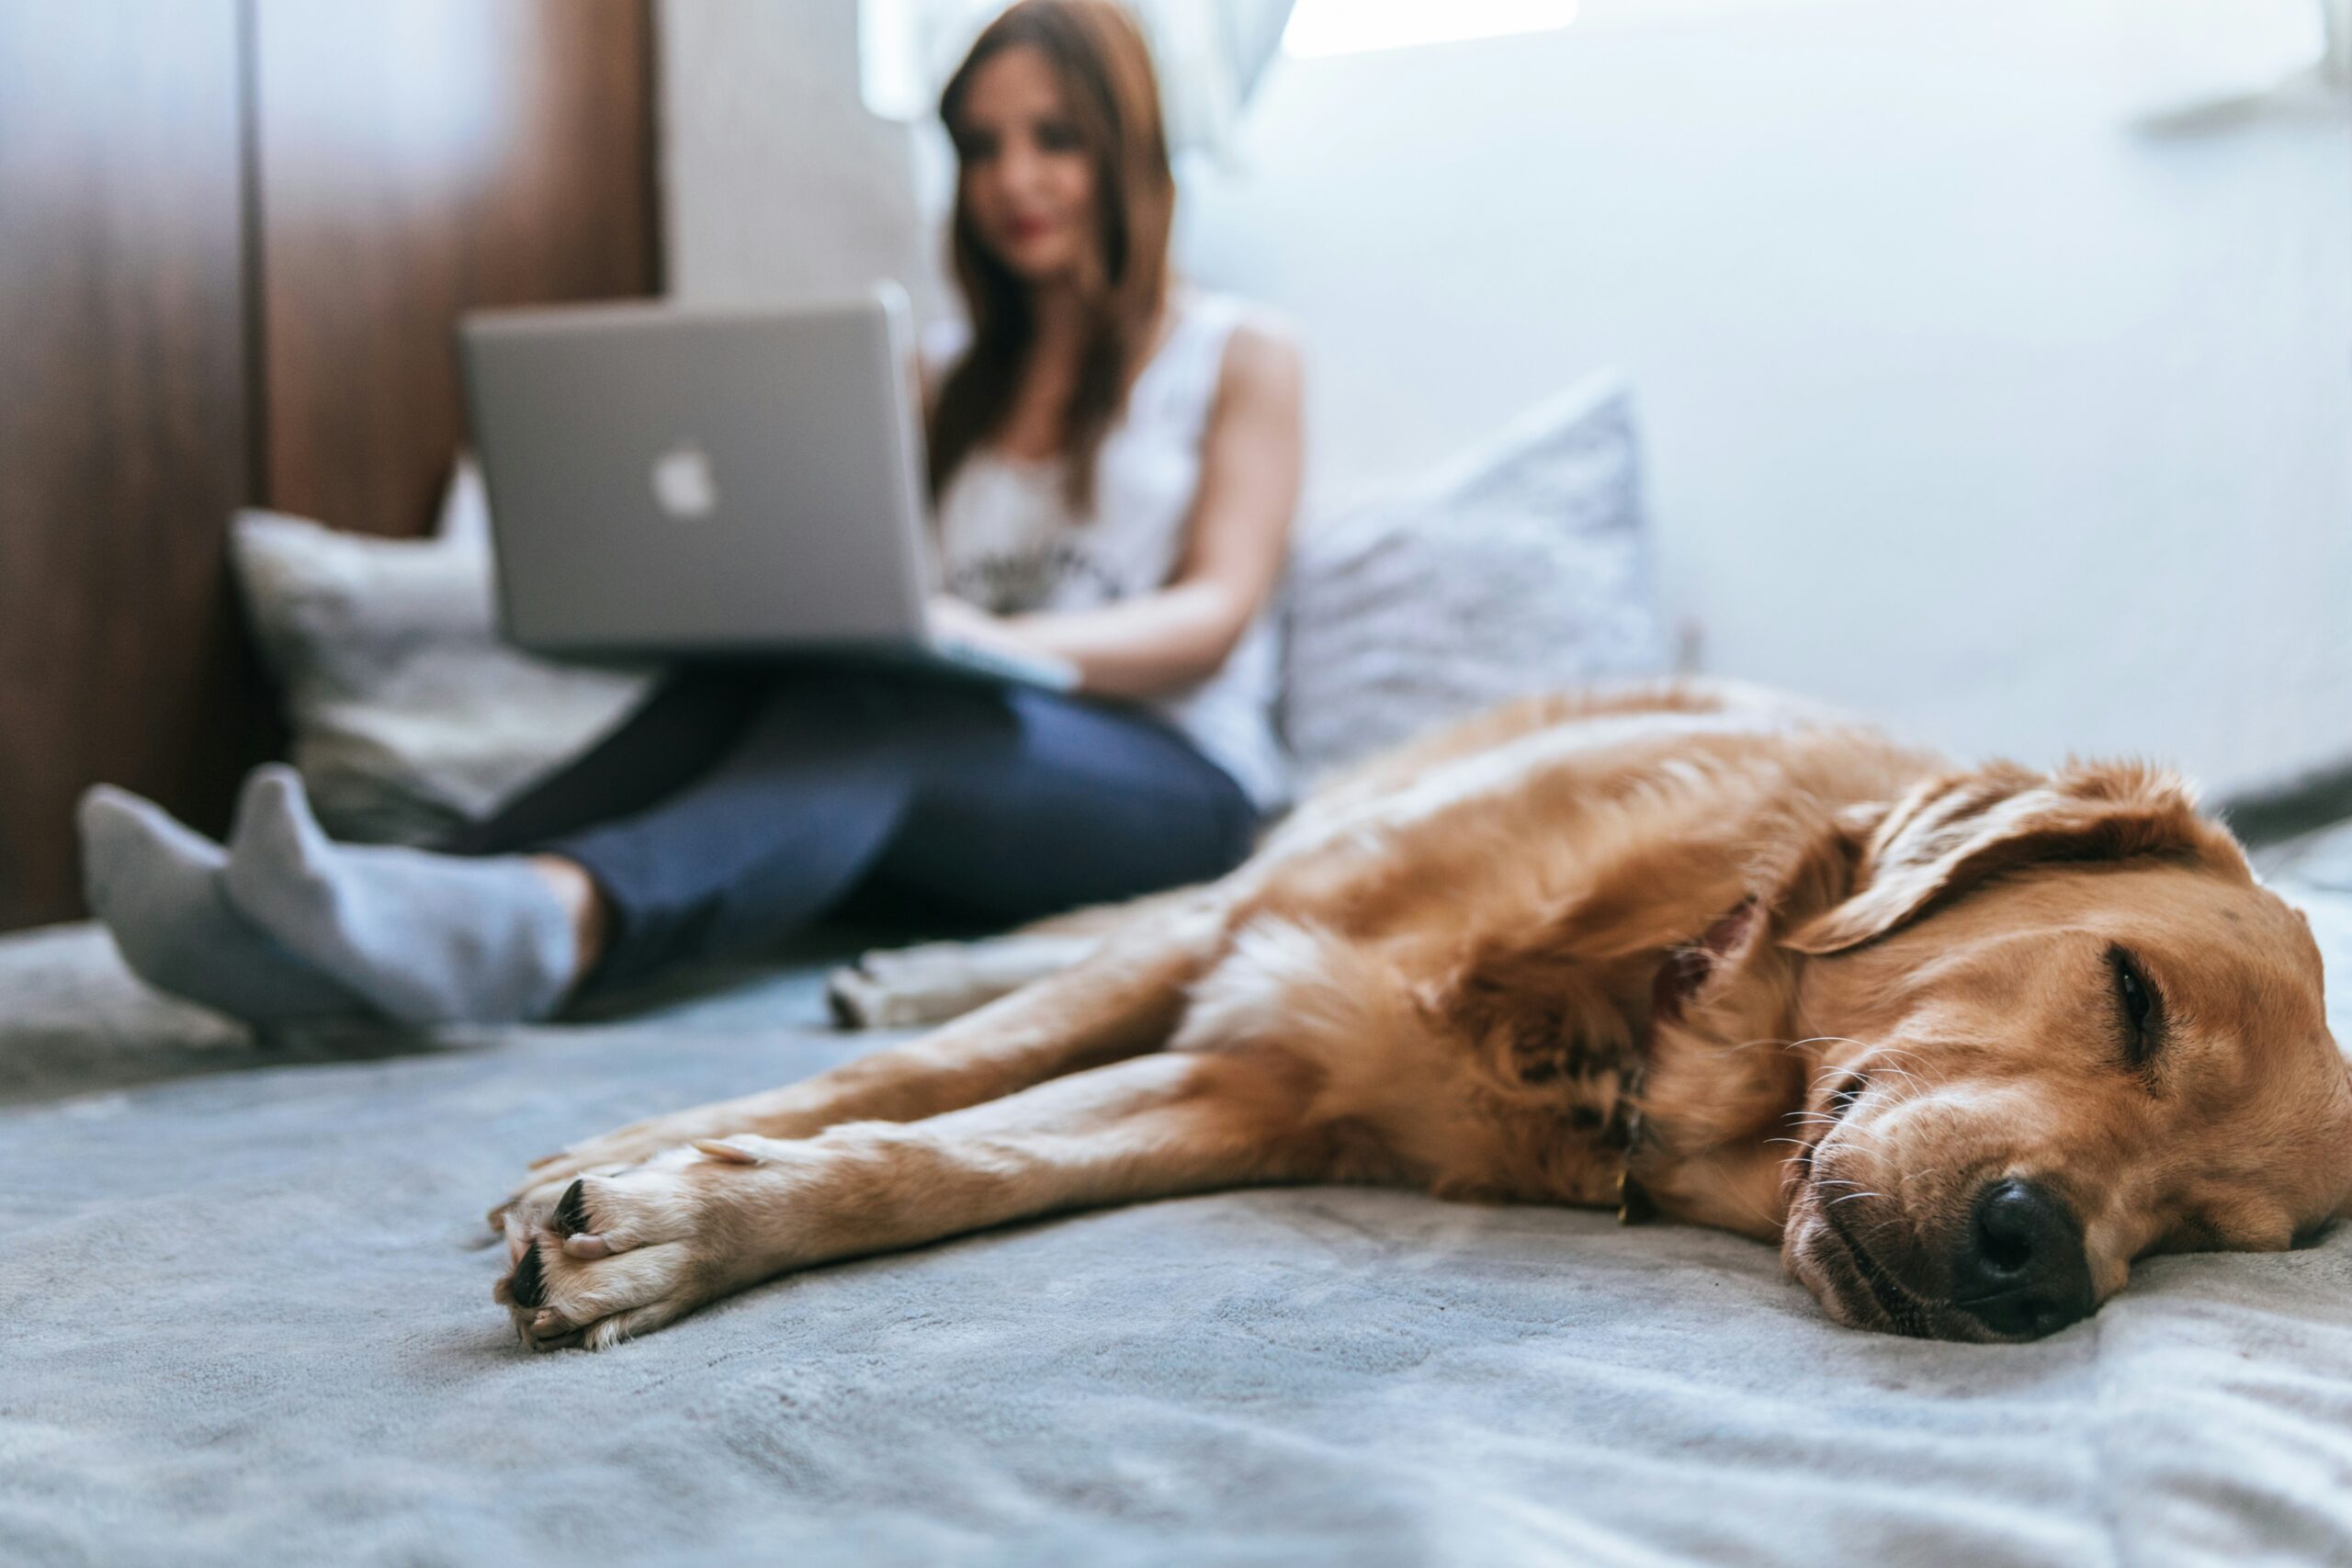 Netviet Review Shares Pet Care Knowledge